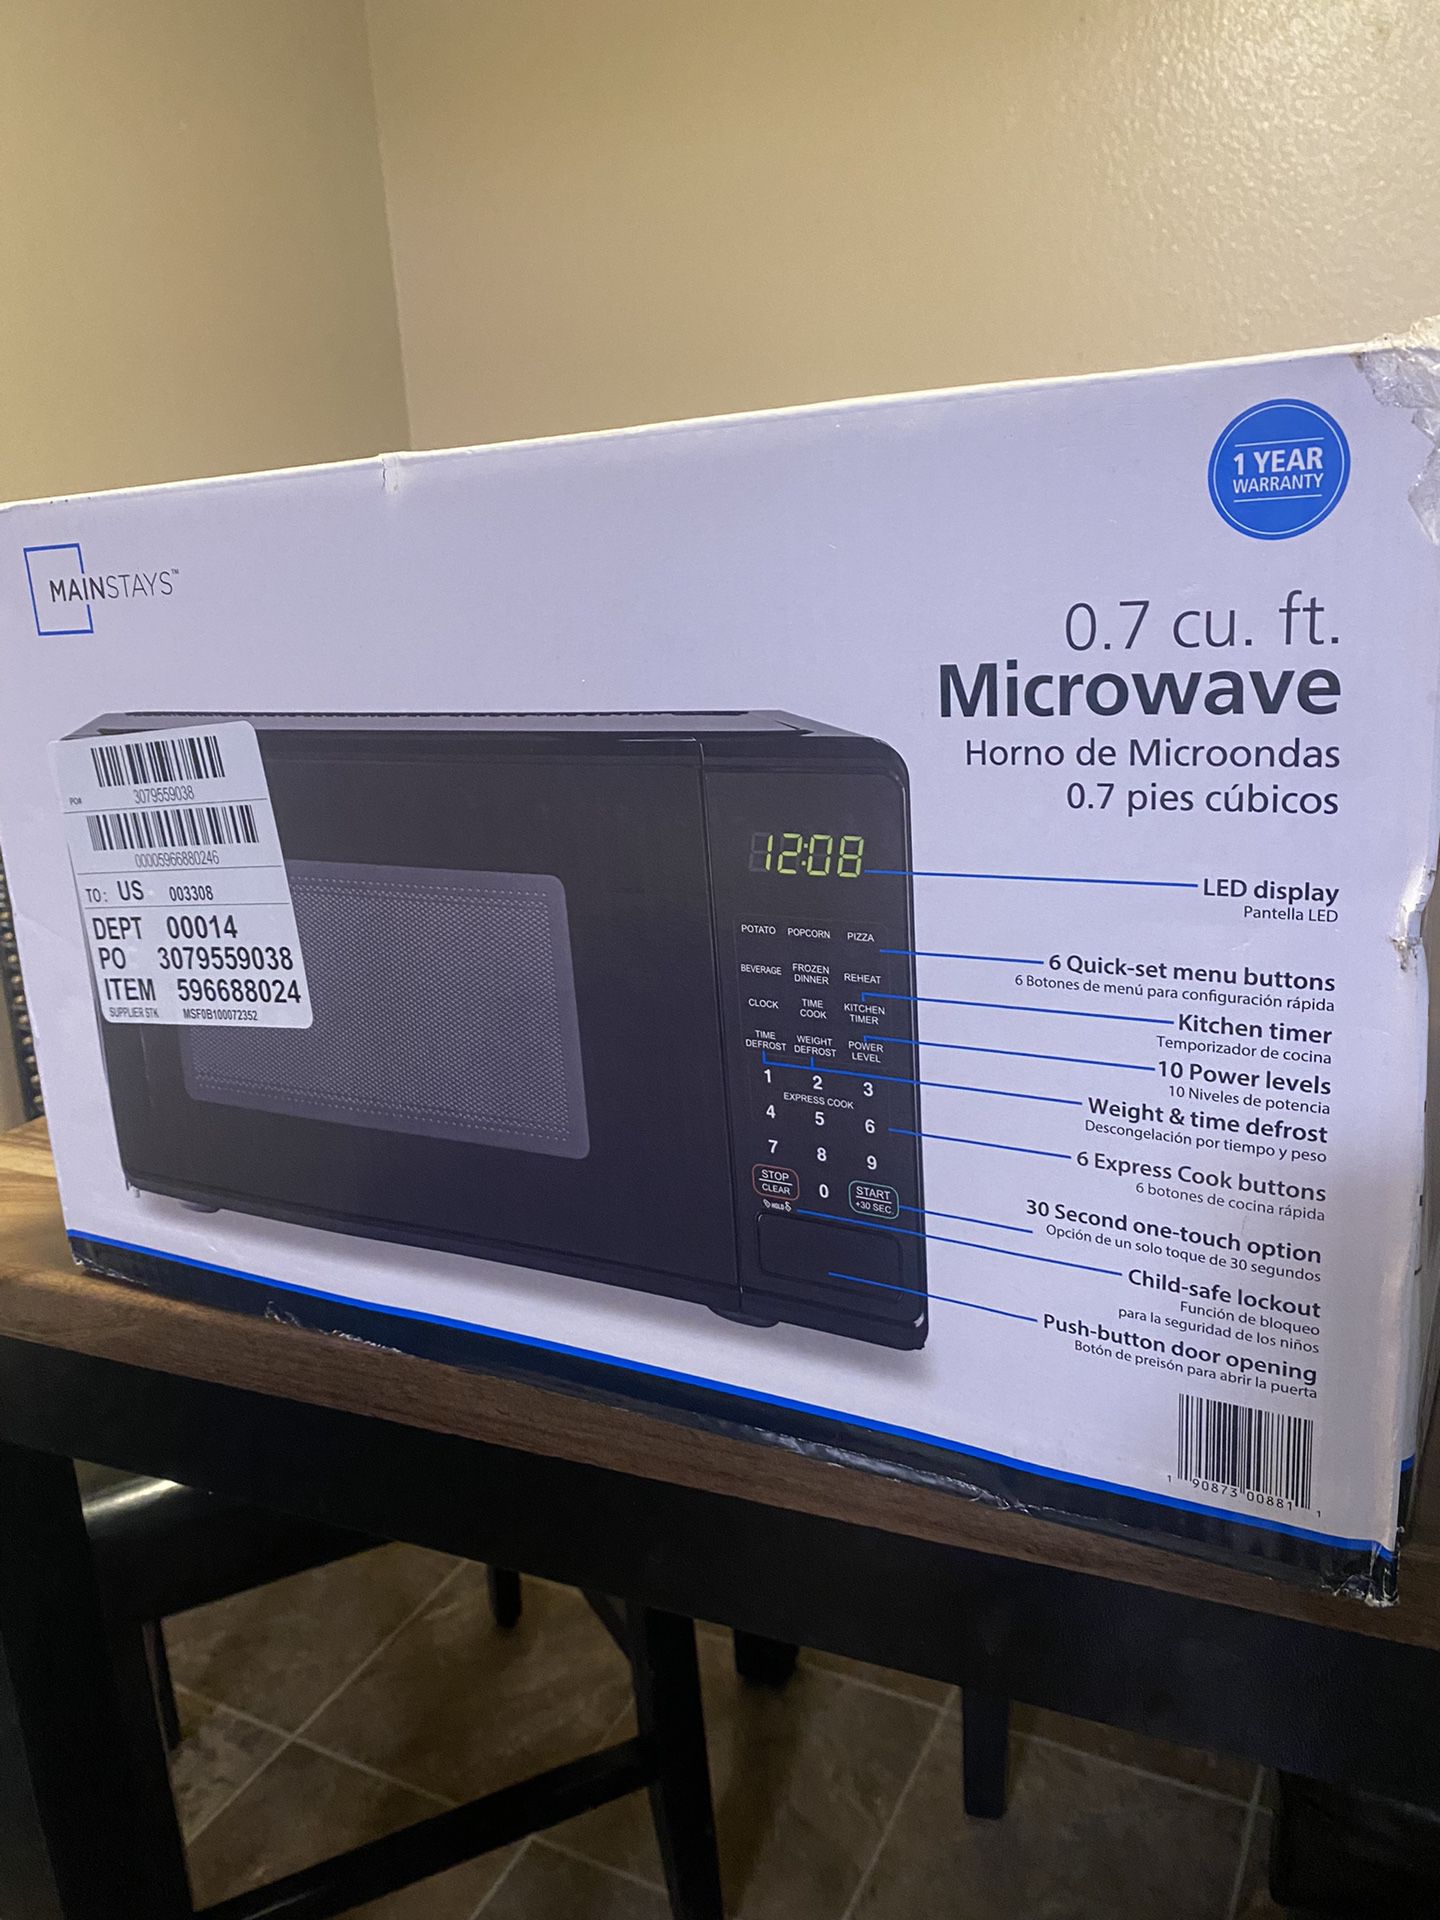 New Black Microwave 